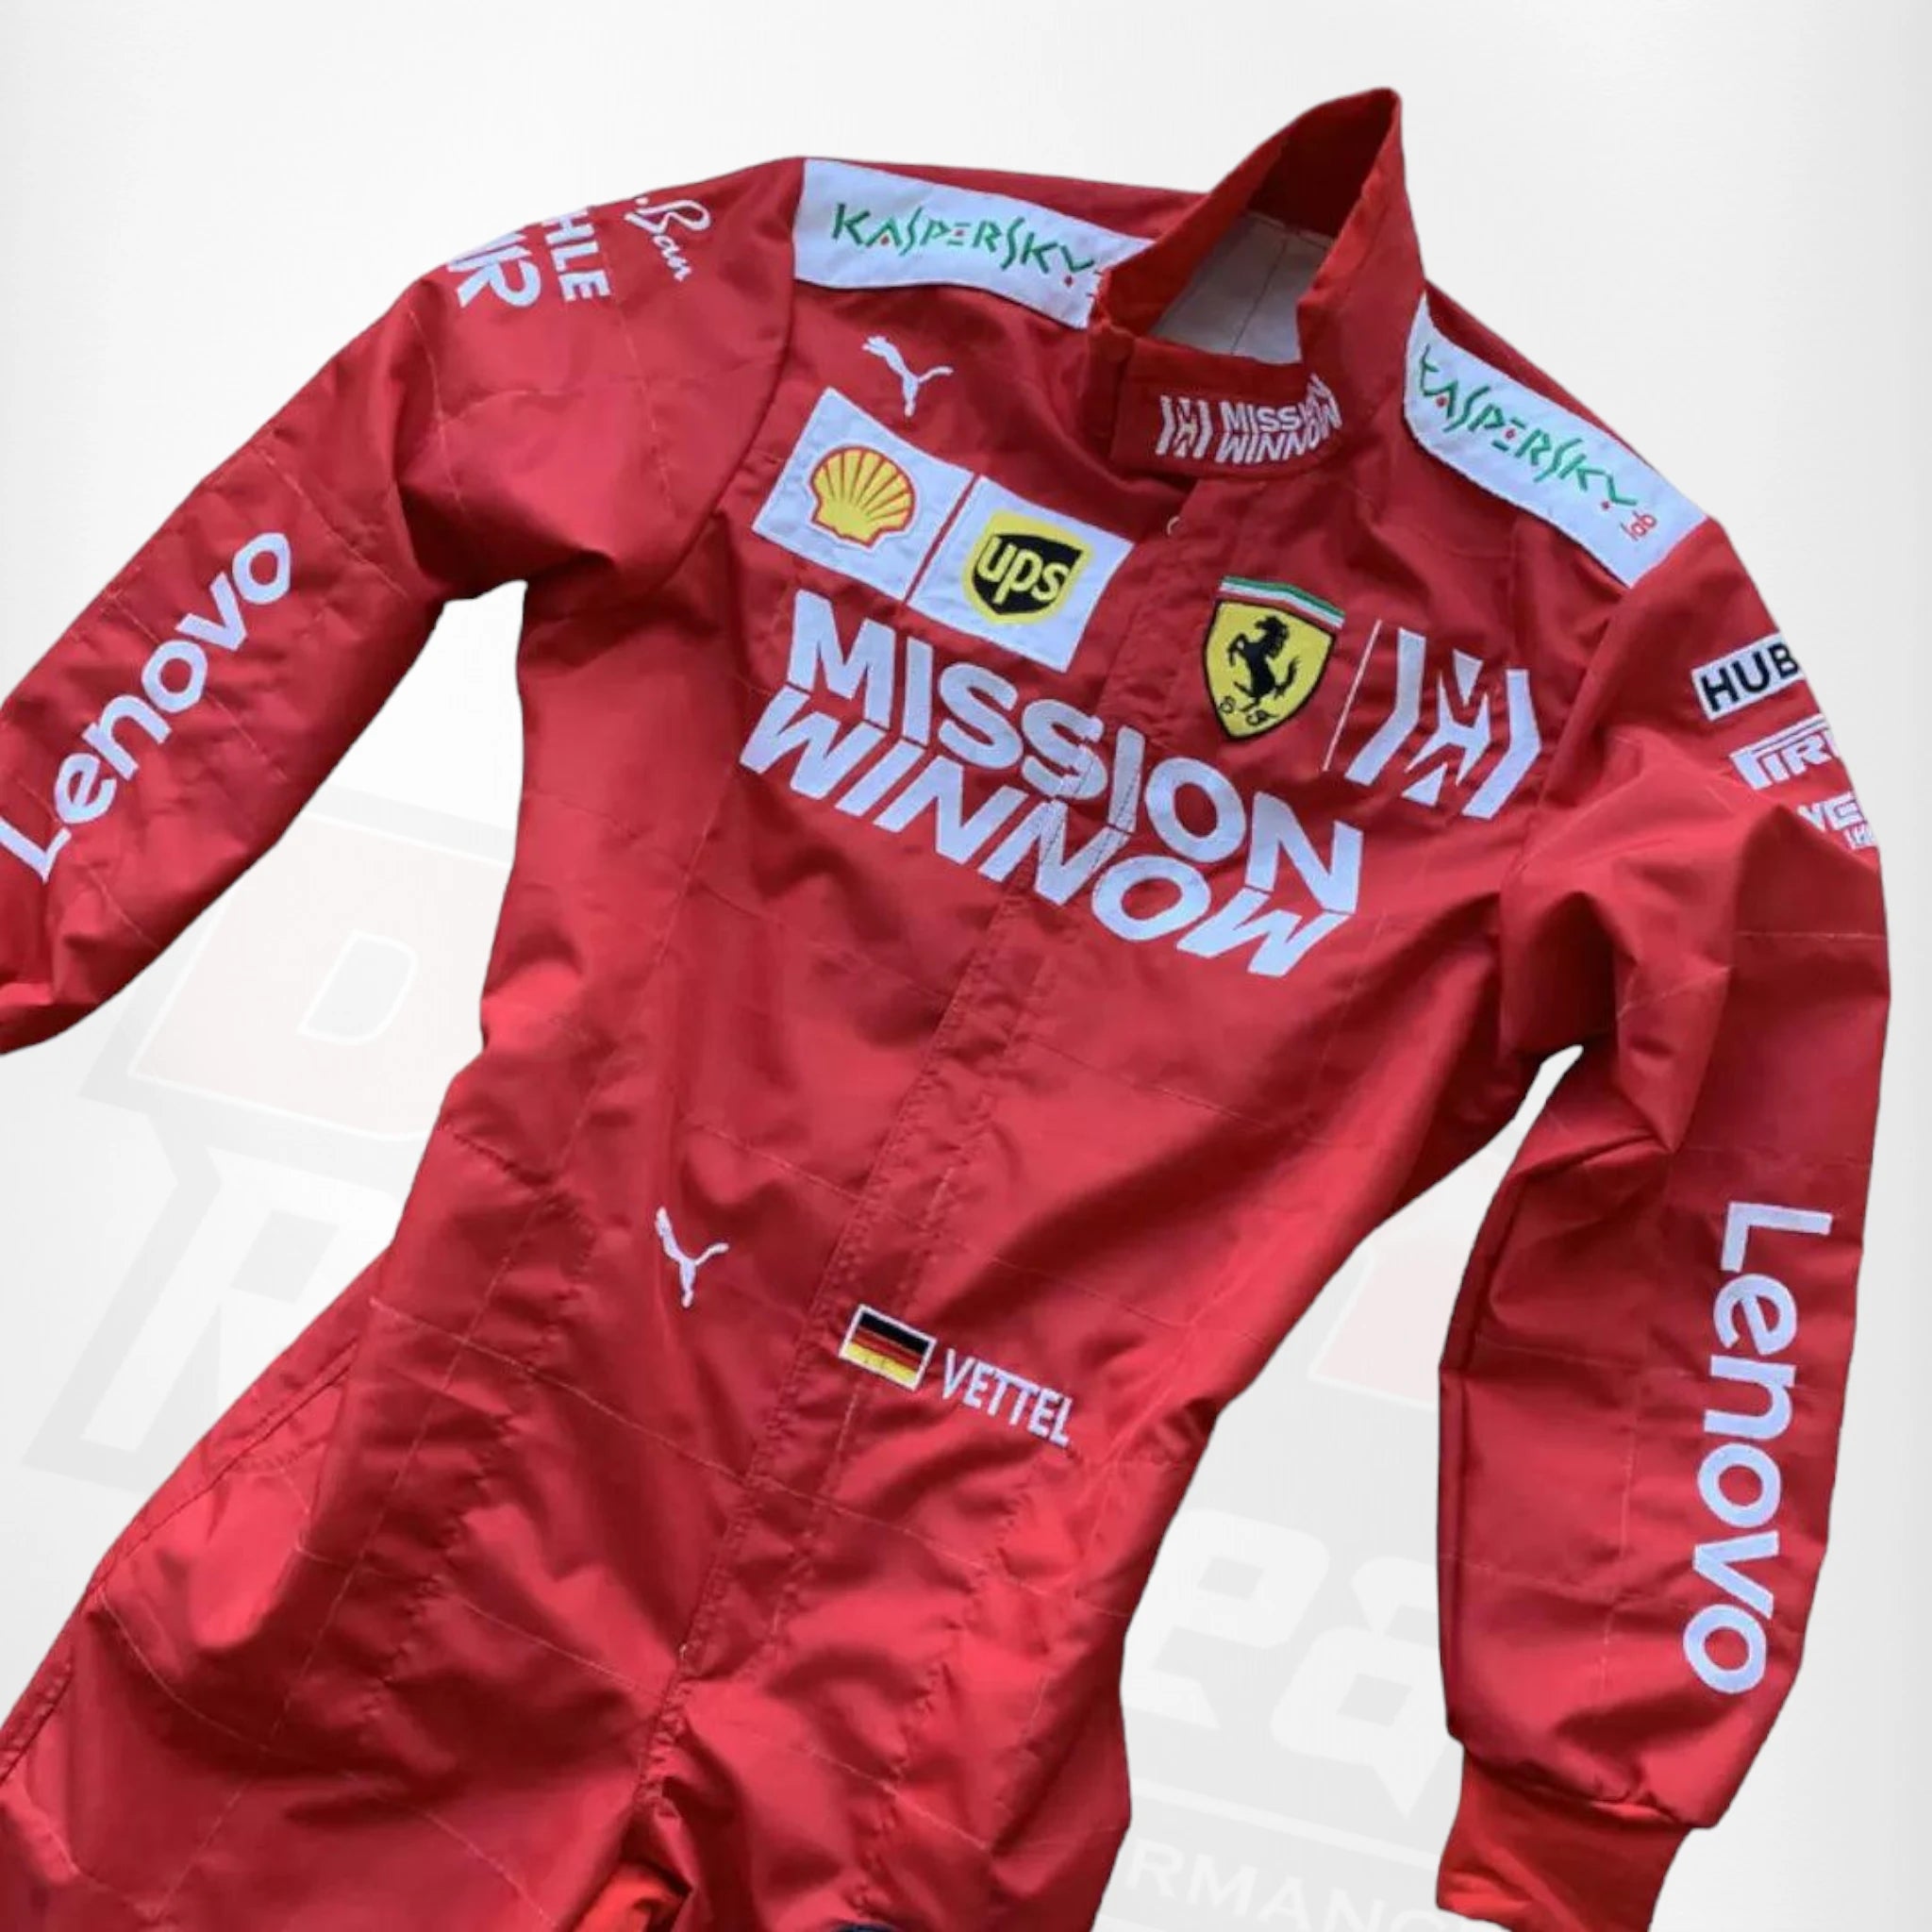 Sebastin Vettel 2019 MISSION WINNOW Replica Racing Suit